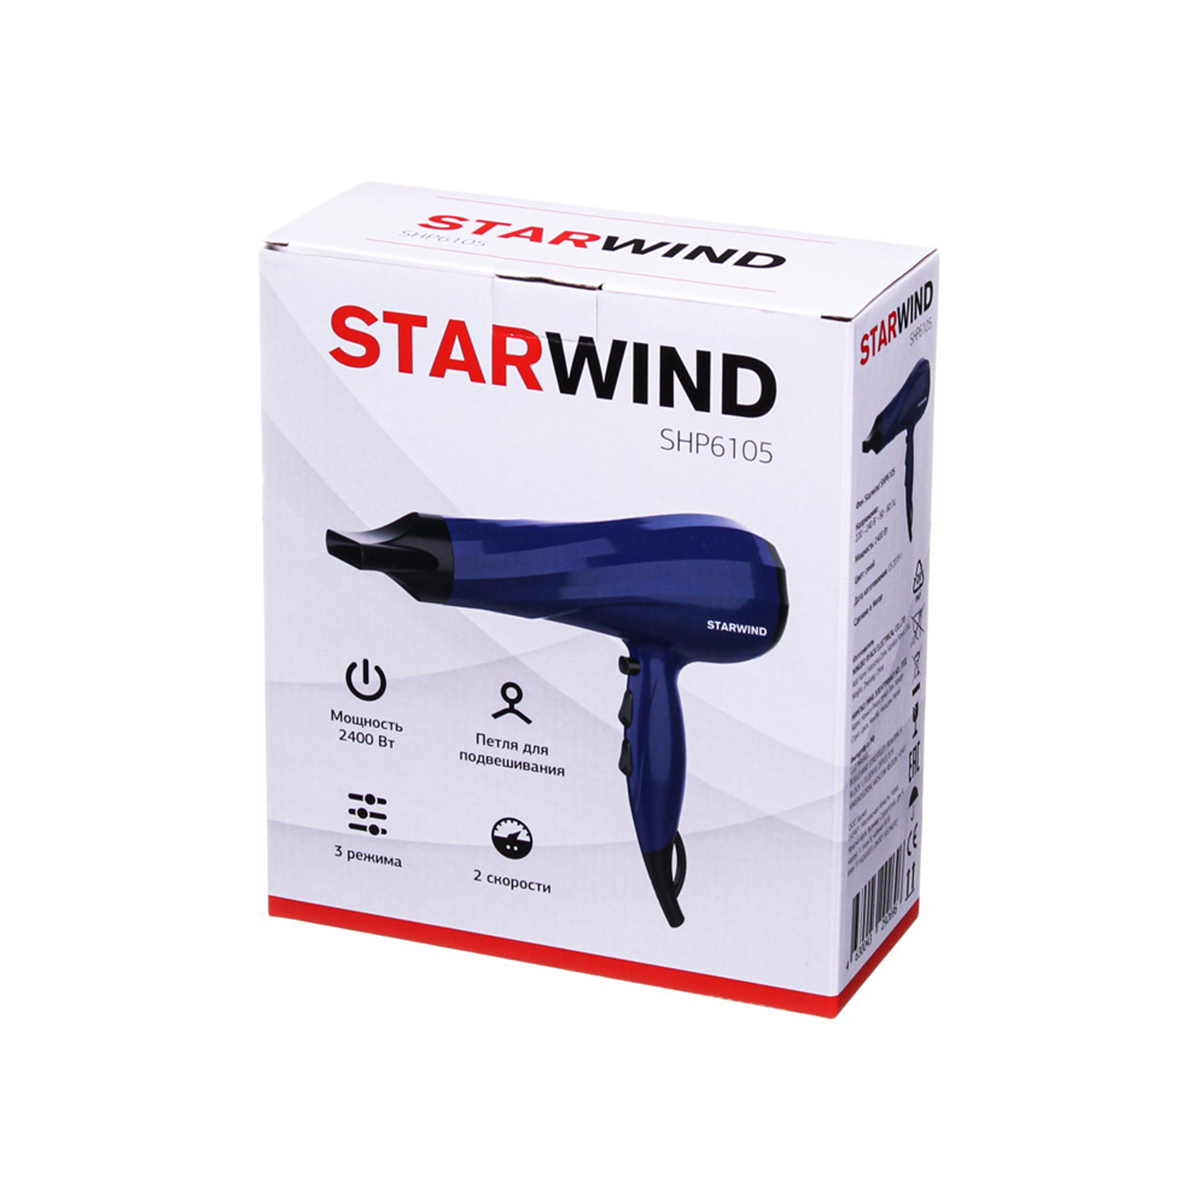 Фен shp6105 2400 вт (1/12) "starwind"